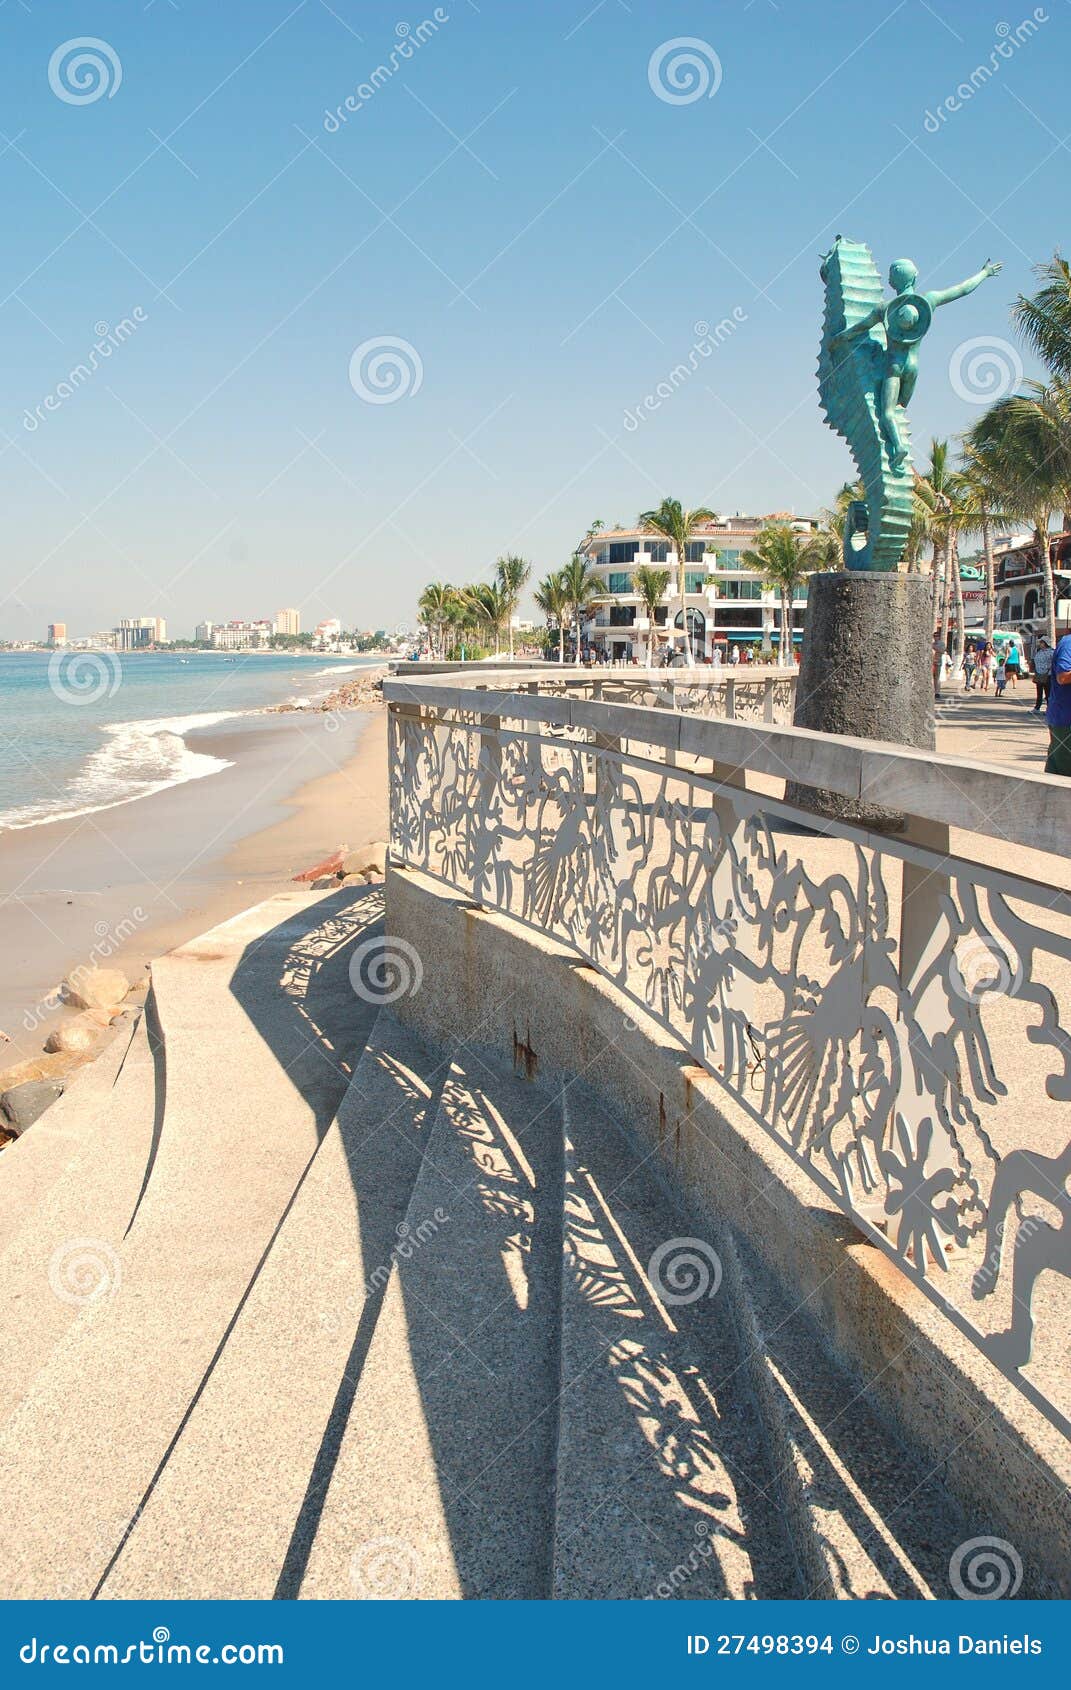 seahorse statute on malecÃÂ³n in puerto vallarta